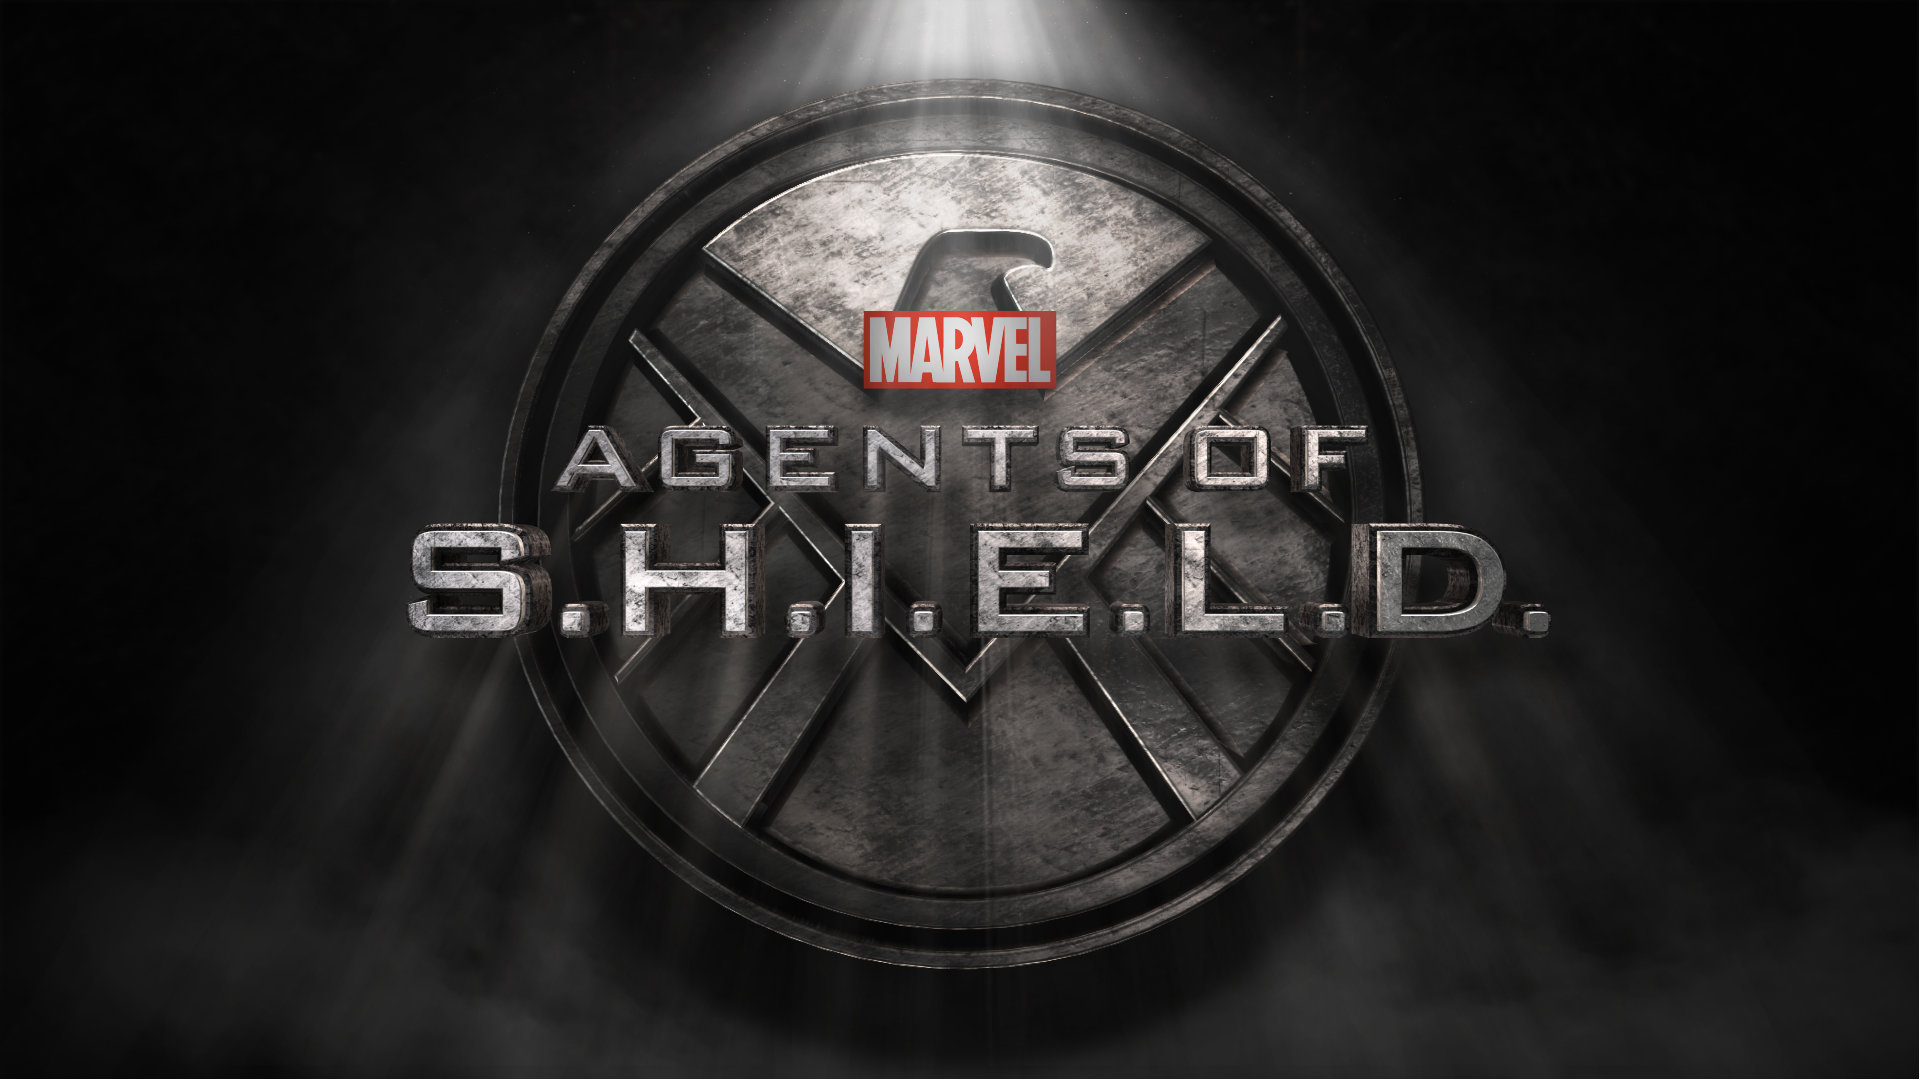 Marvel’s Agents of S.H.I.E.L.D. Returns